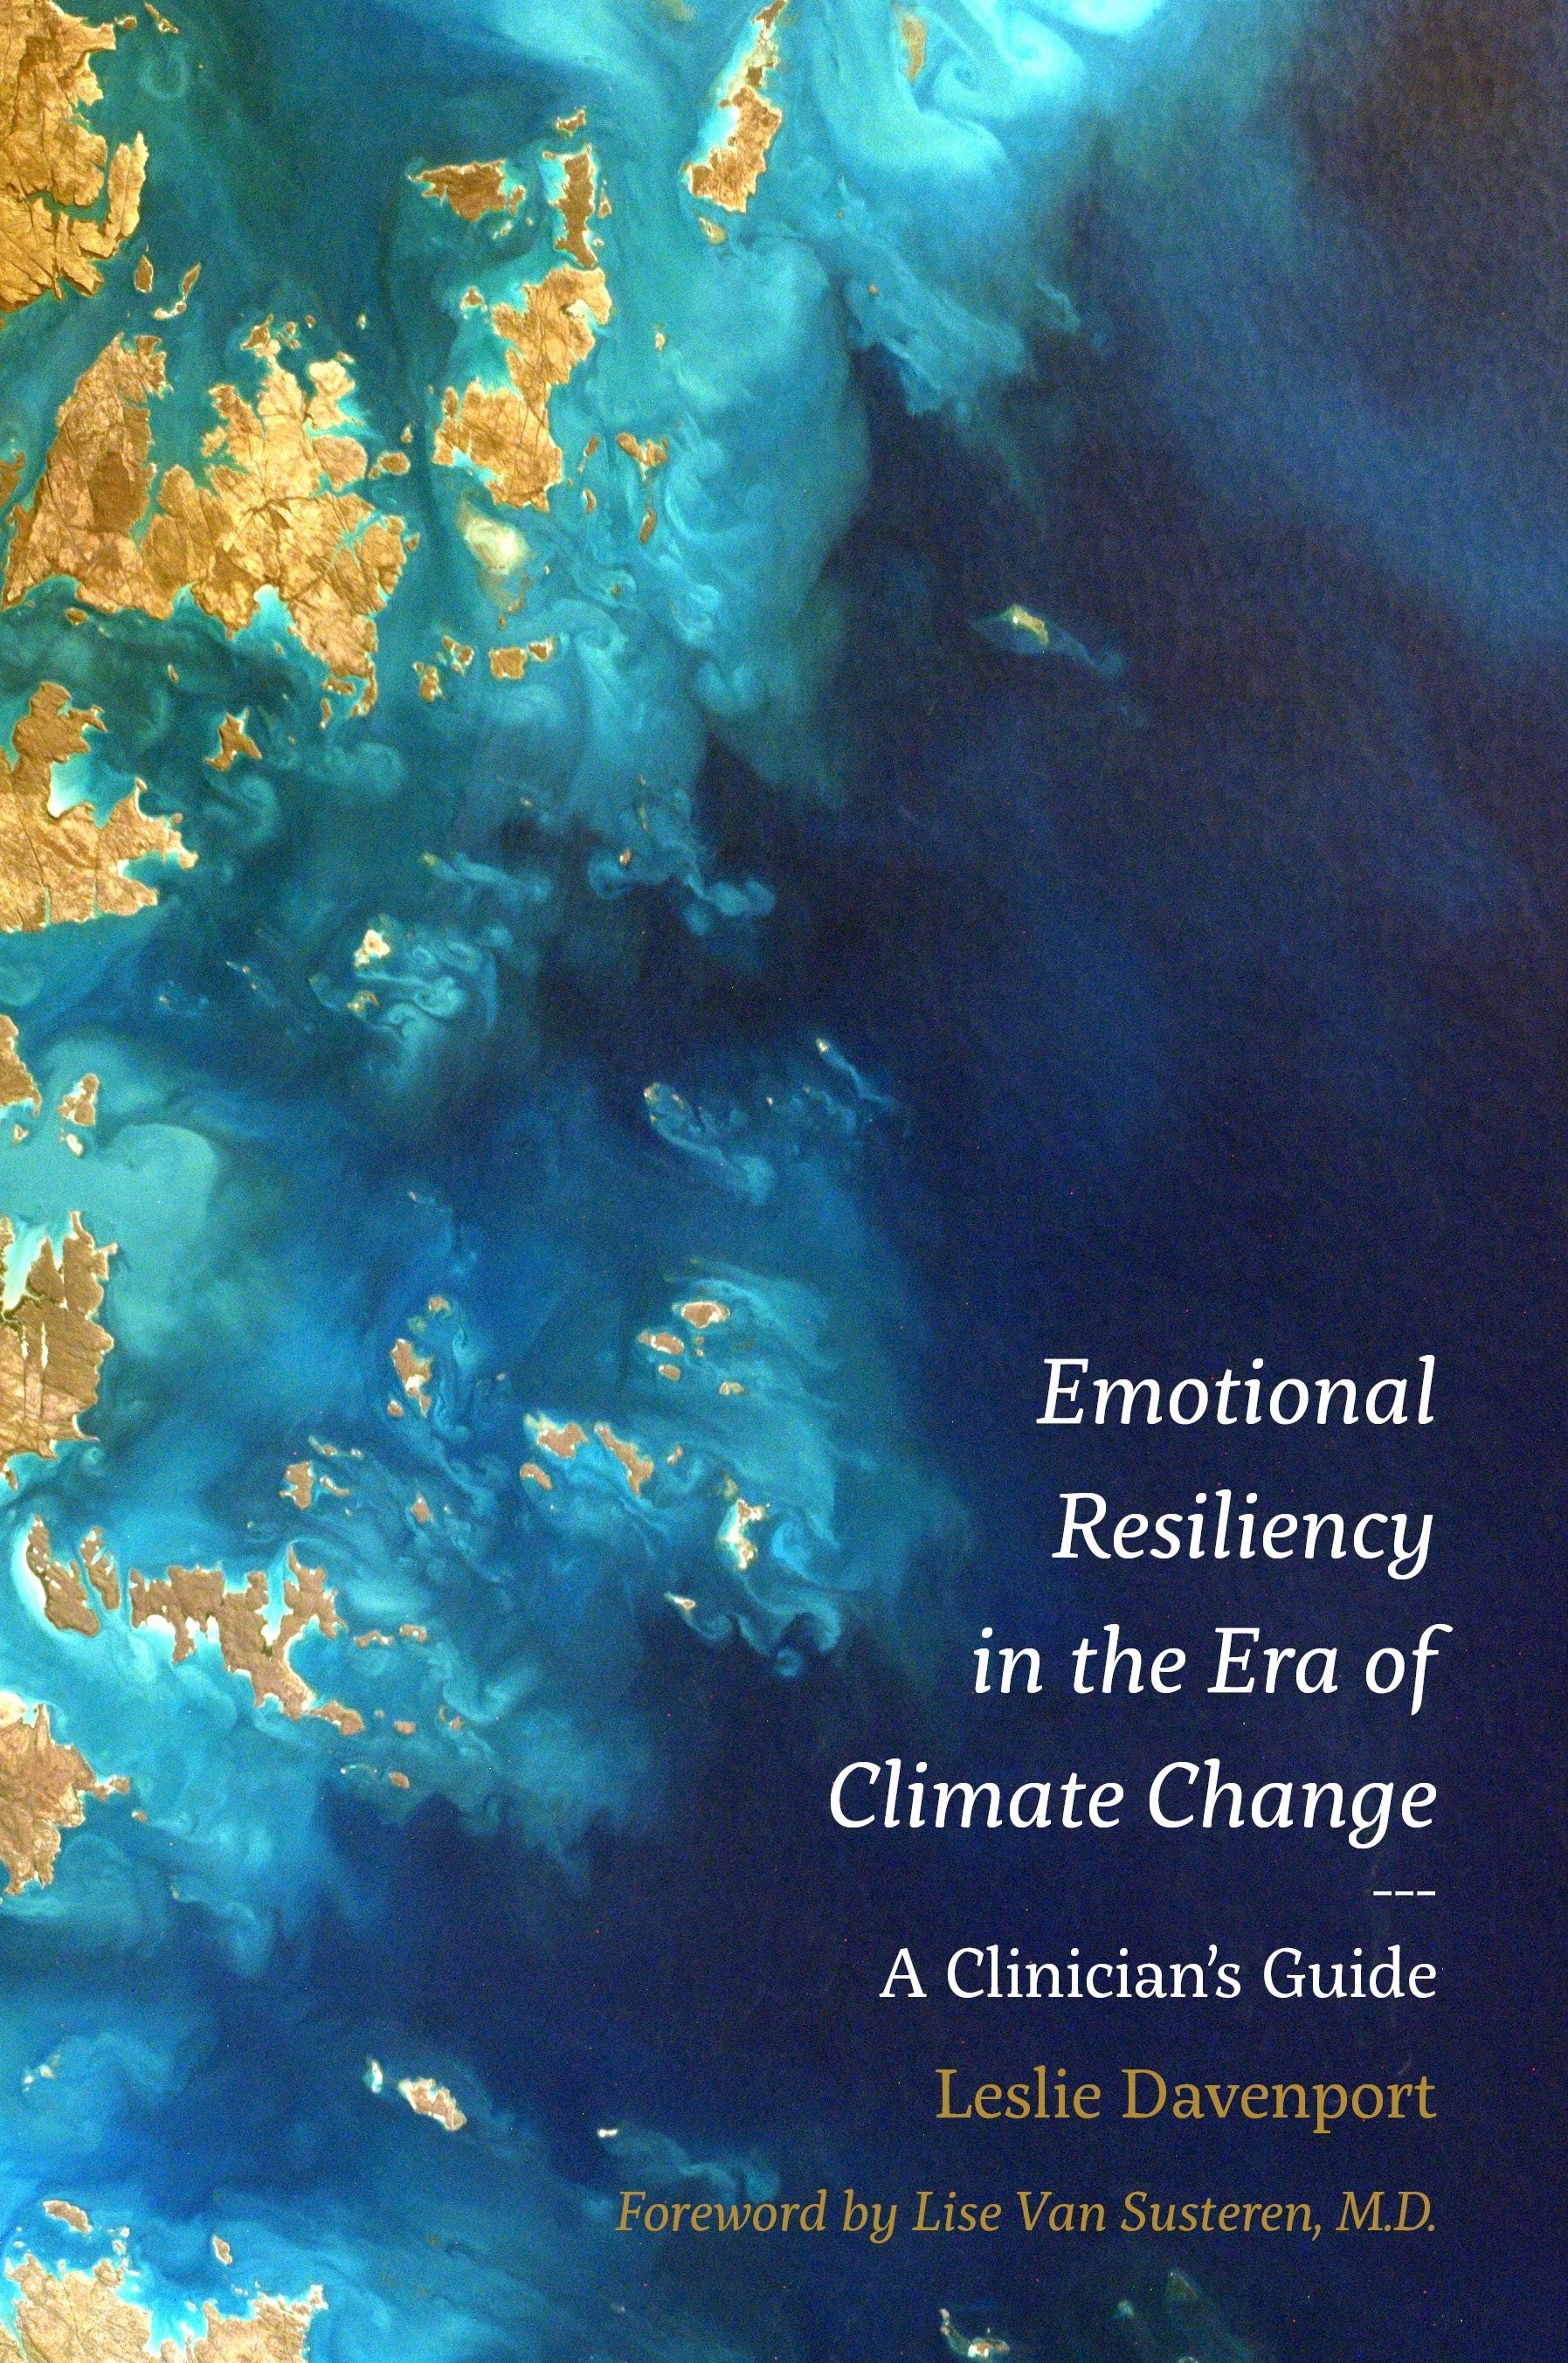 Emotional Resiliency in the Era of Climate Change by Leslie Davenport, Lise Van Susteren, M.D.